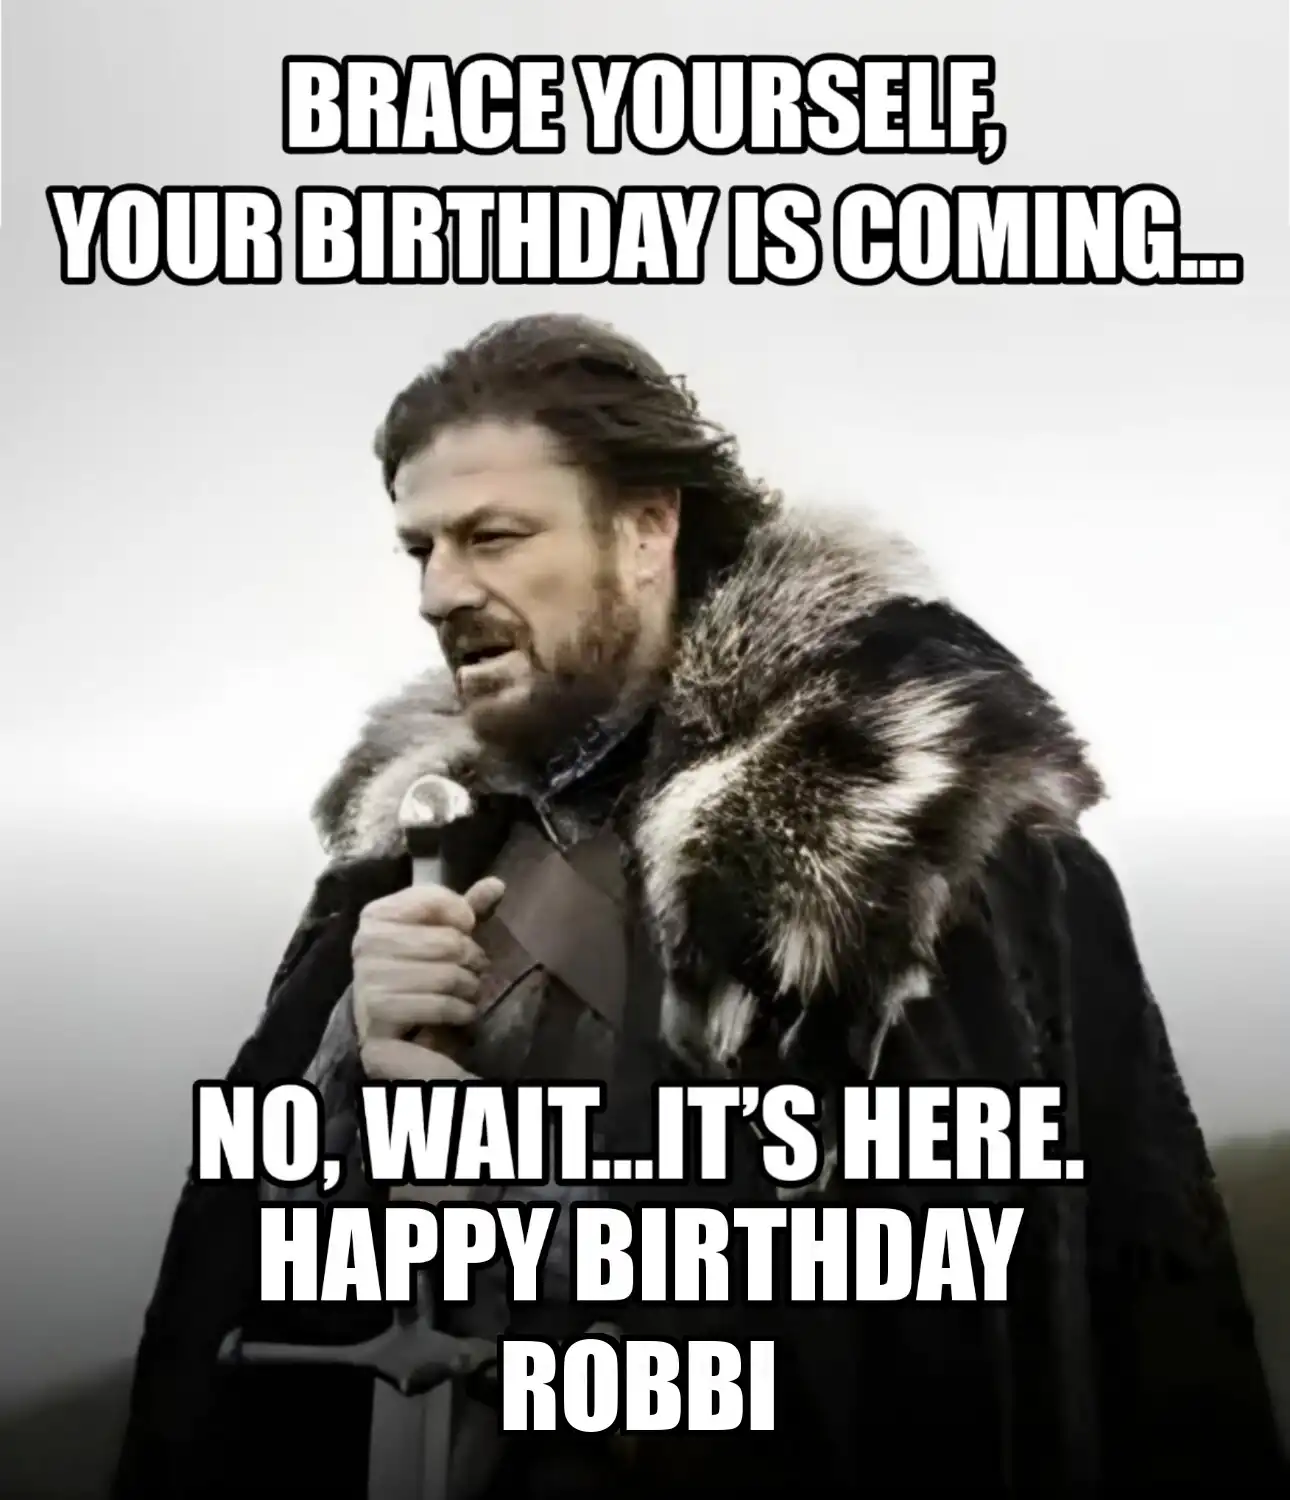 Happy Birthday Robbi Brace Yourself Your Birthday Is Coming Meme